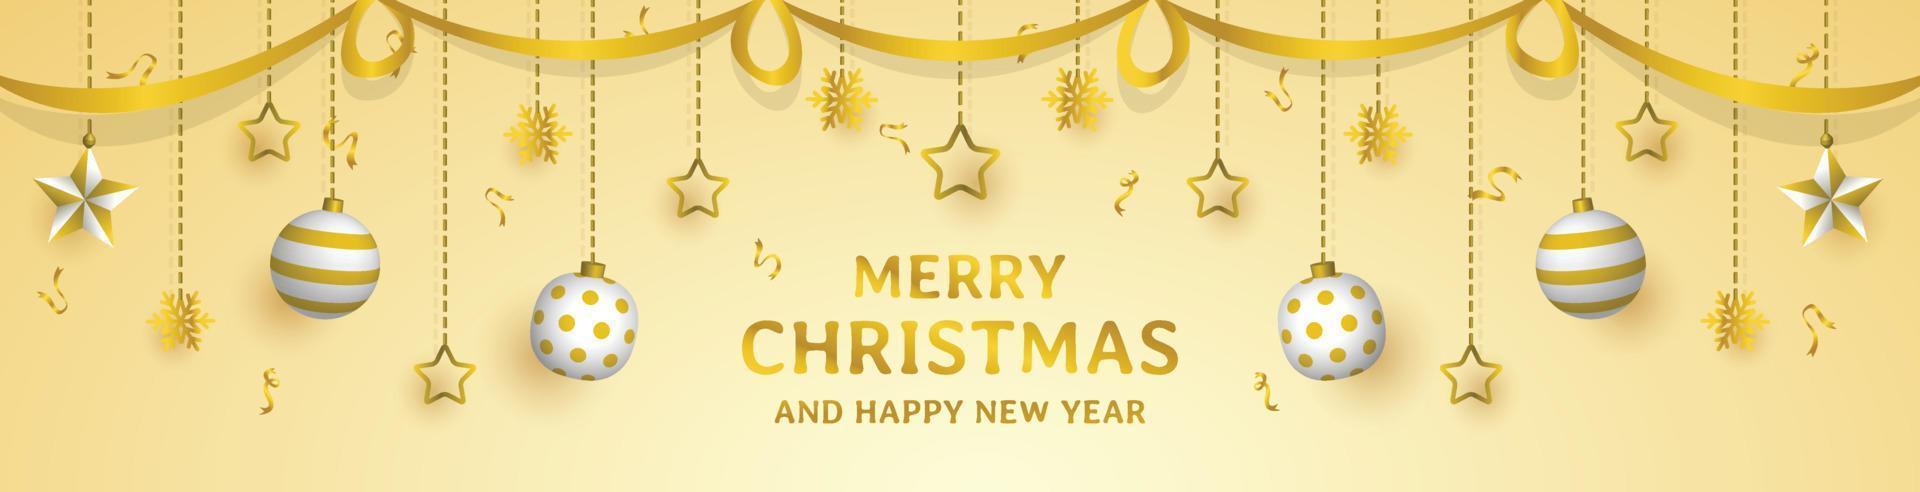 banner de feliz natal, feliz ano novo, com enfeites pendurados, gráfico de vetor de design de estilo de luxo